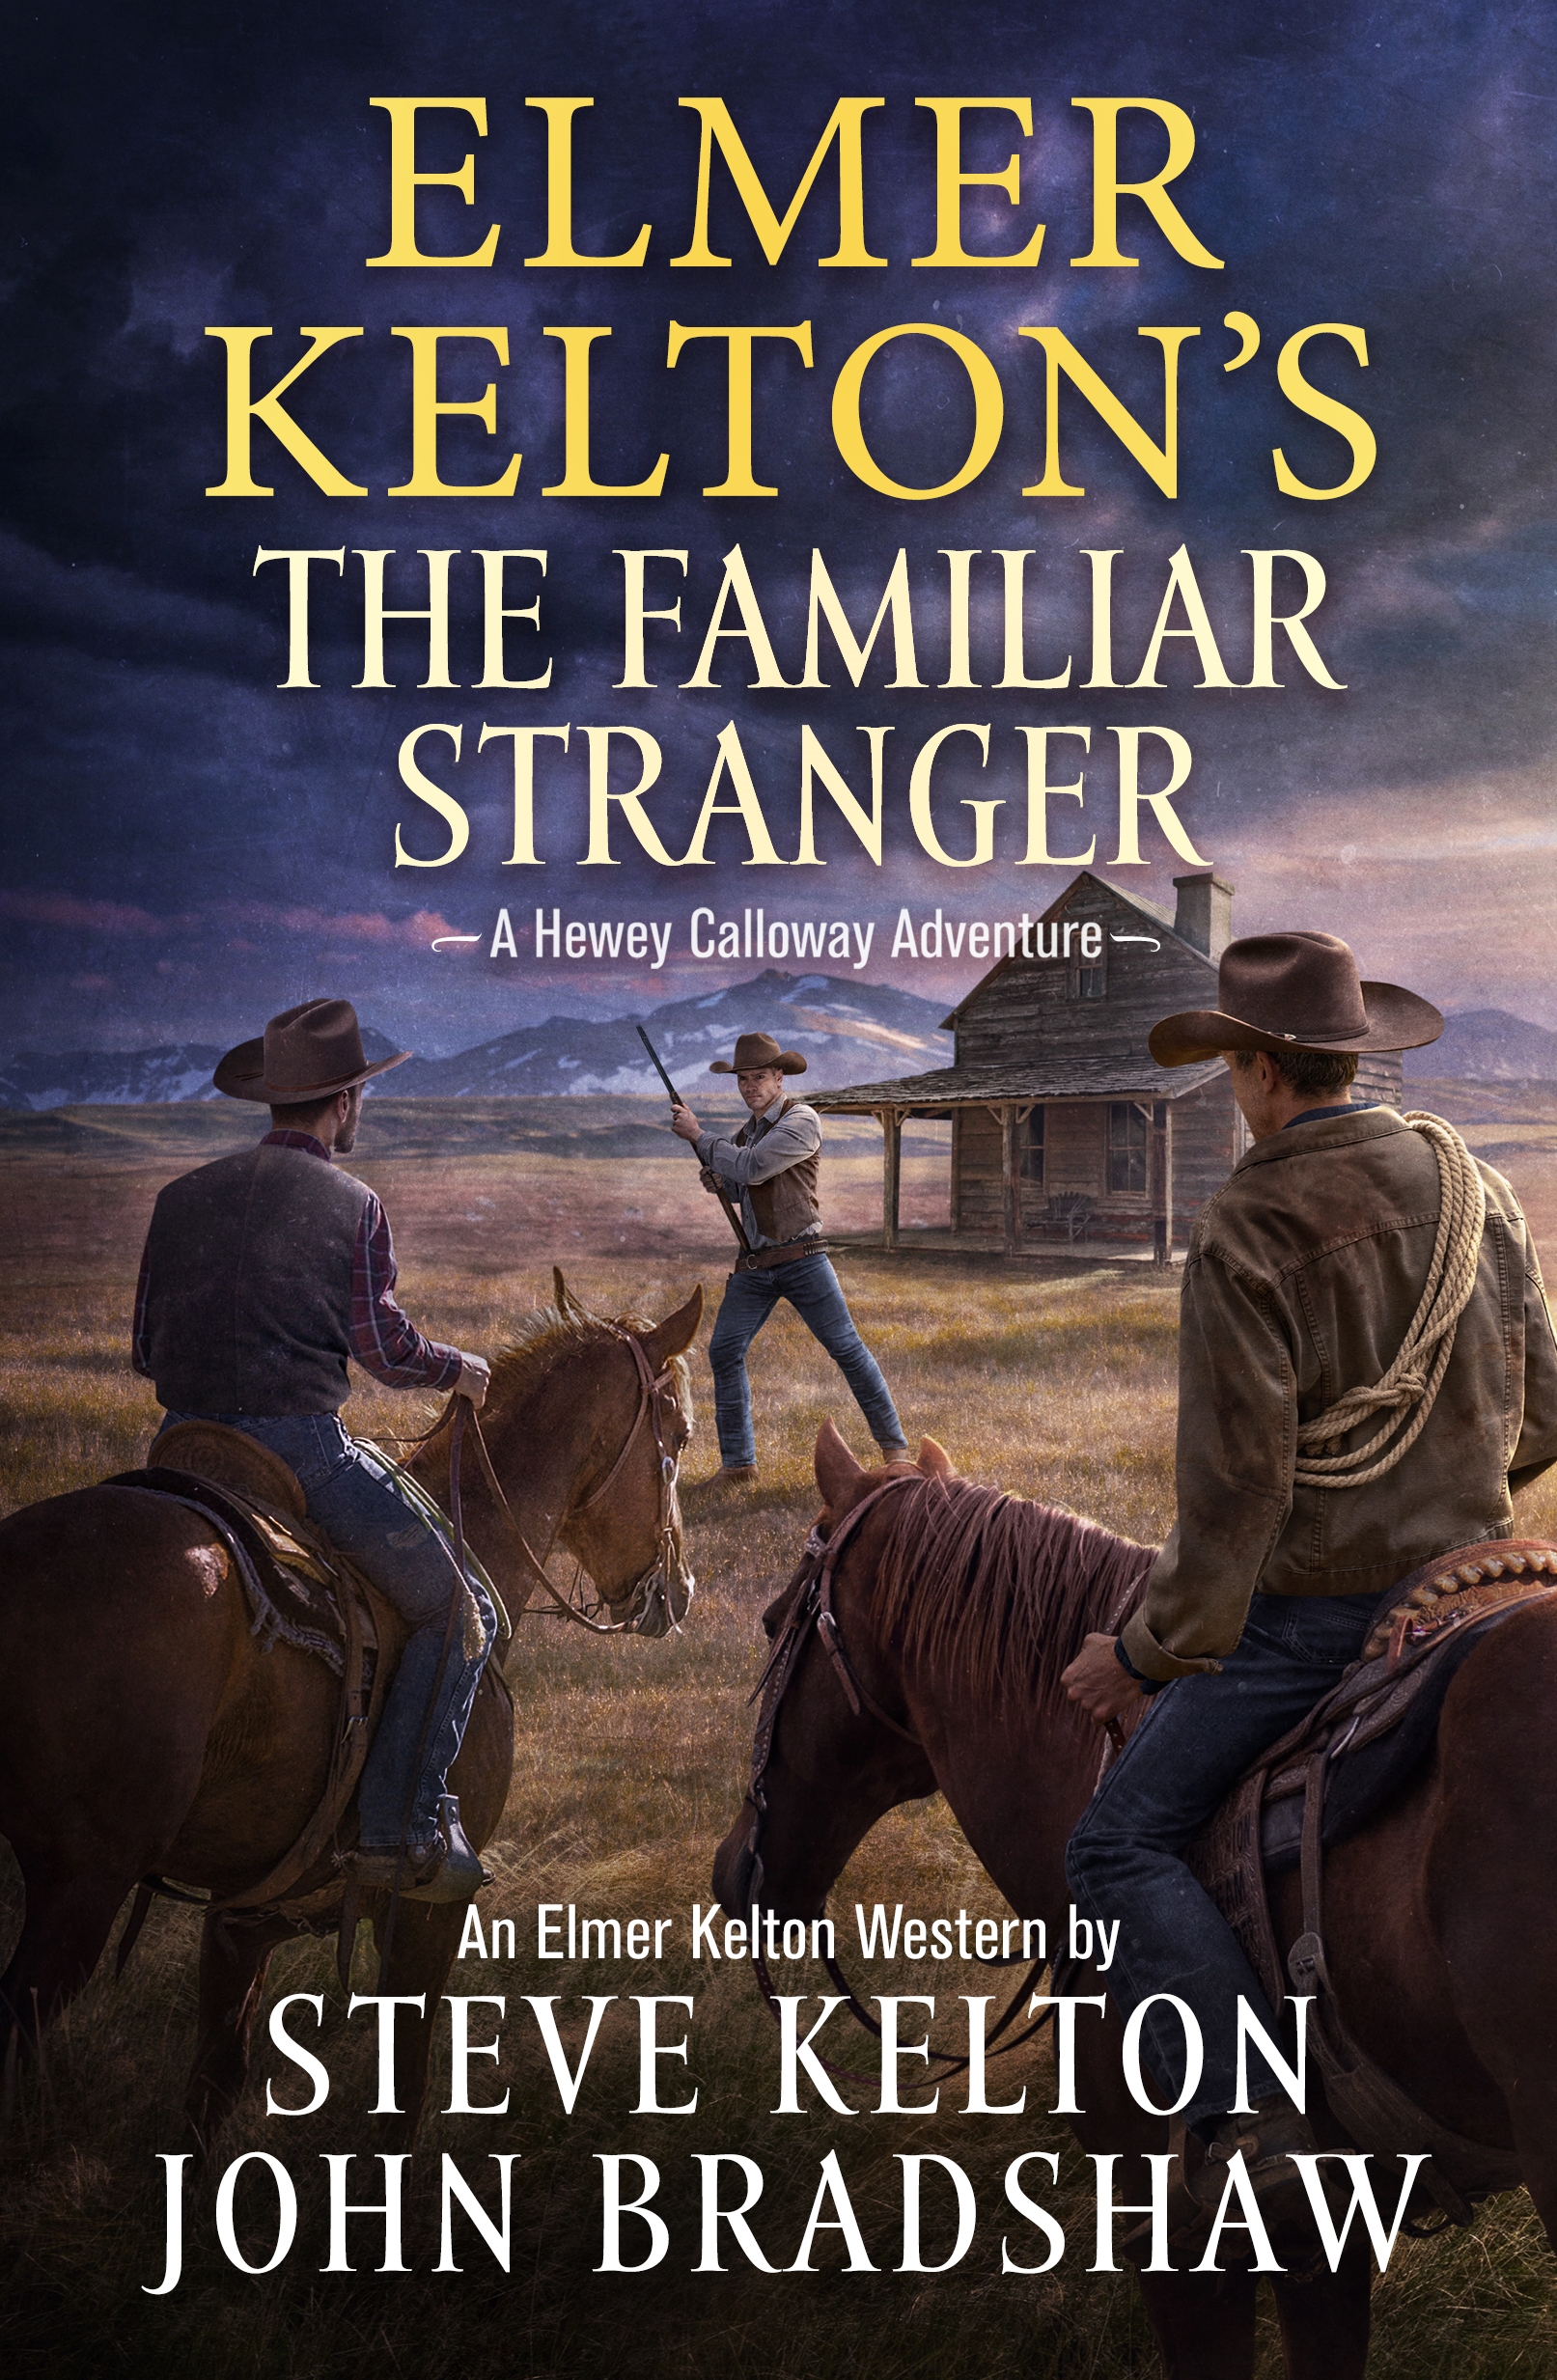 Elmer Kelton's The Familiar Stranger : A Hewey Calloway Adventure by Steve Kelton